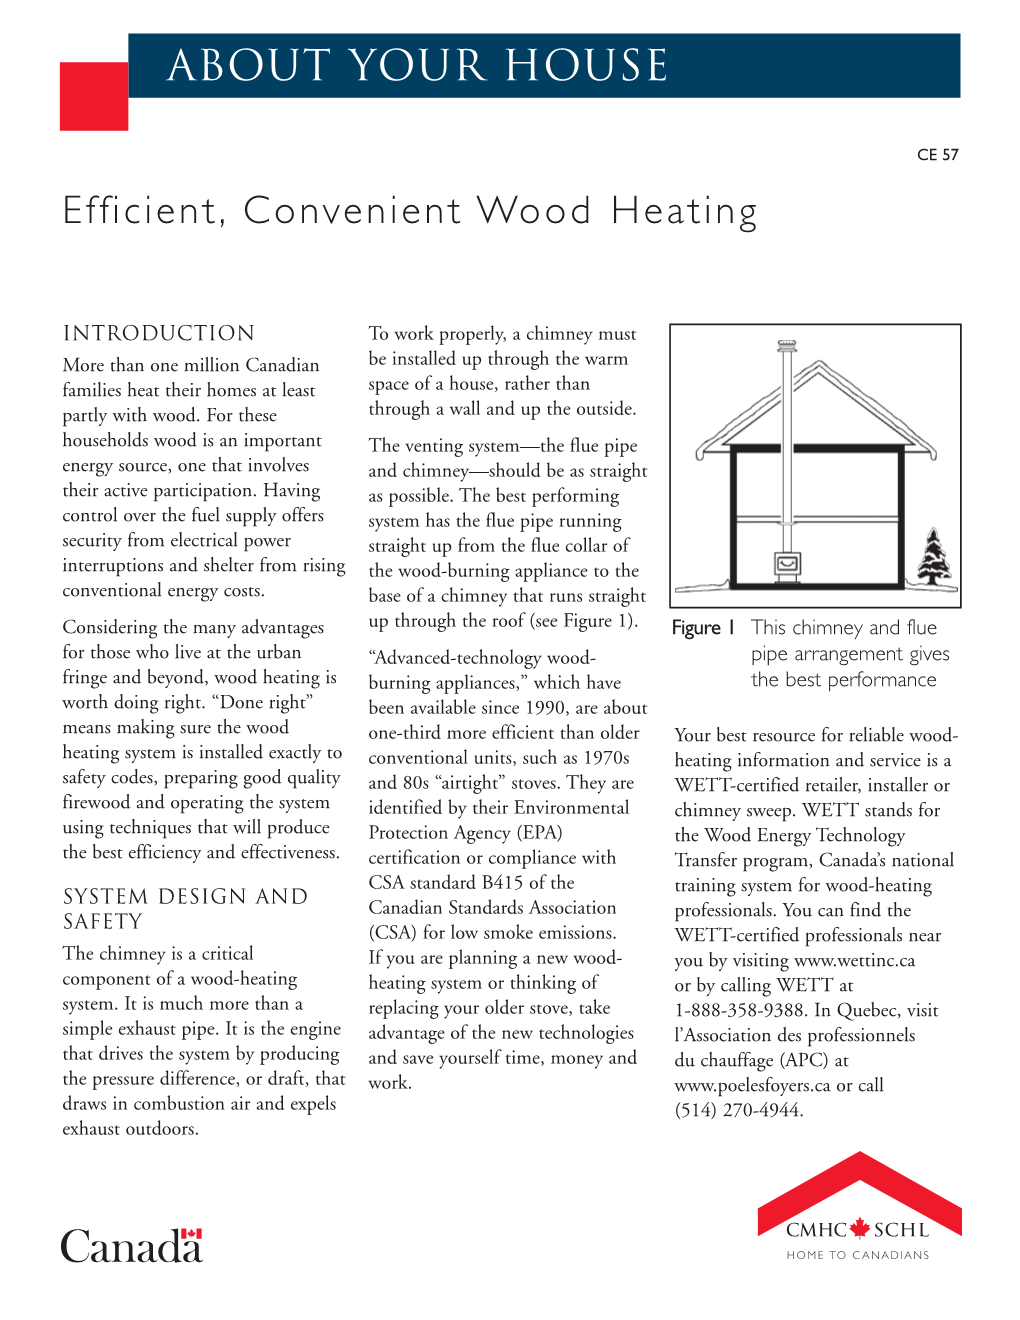 Efficient, Convenient Wood Heating